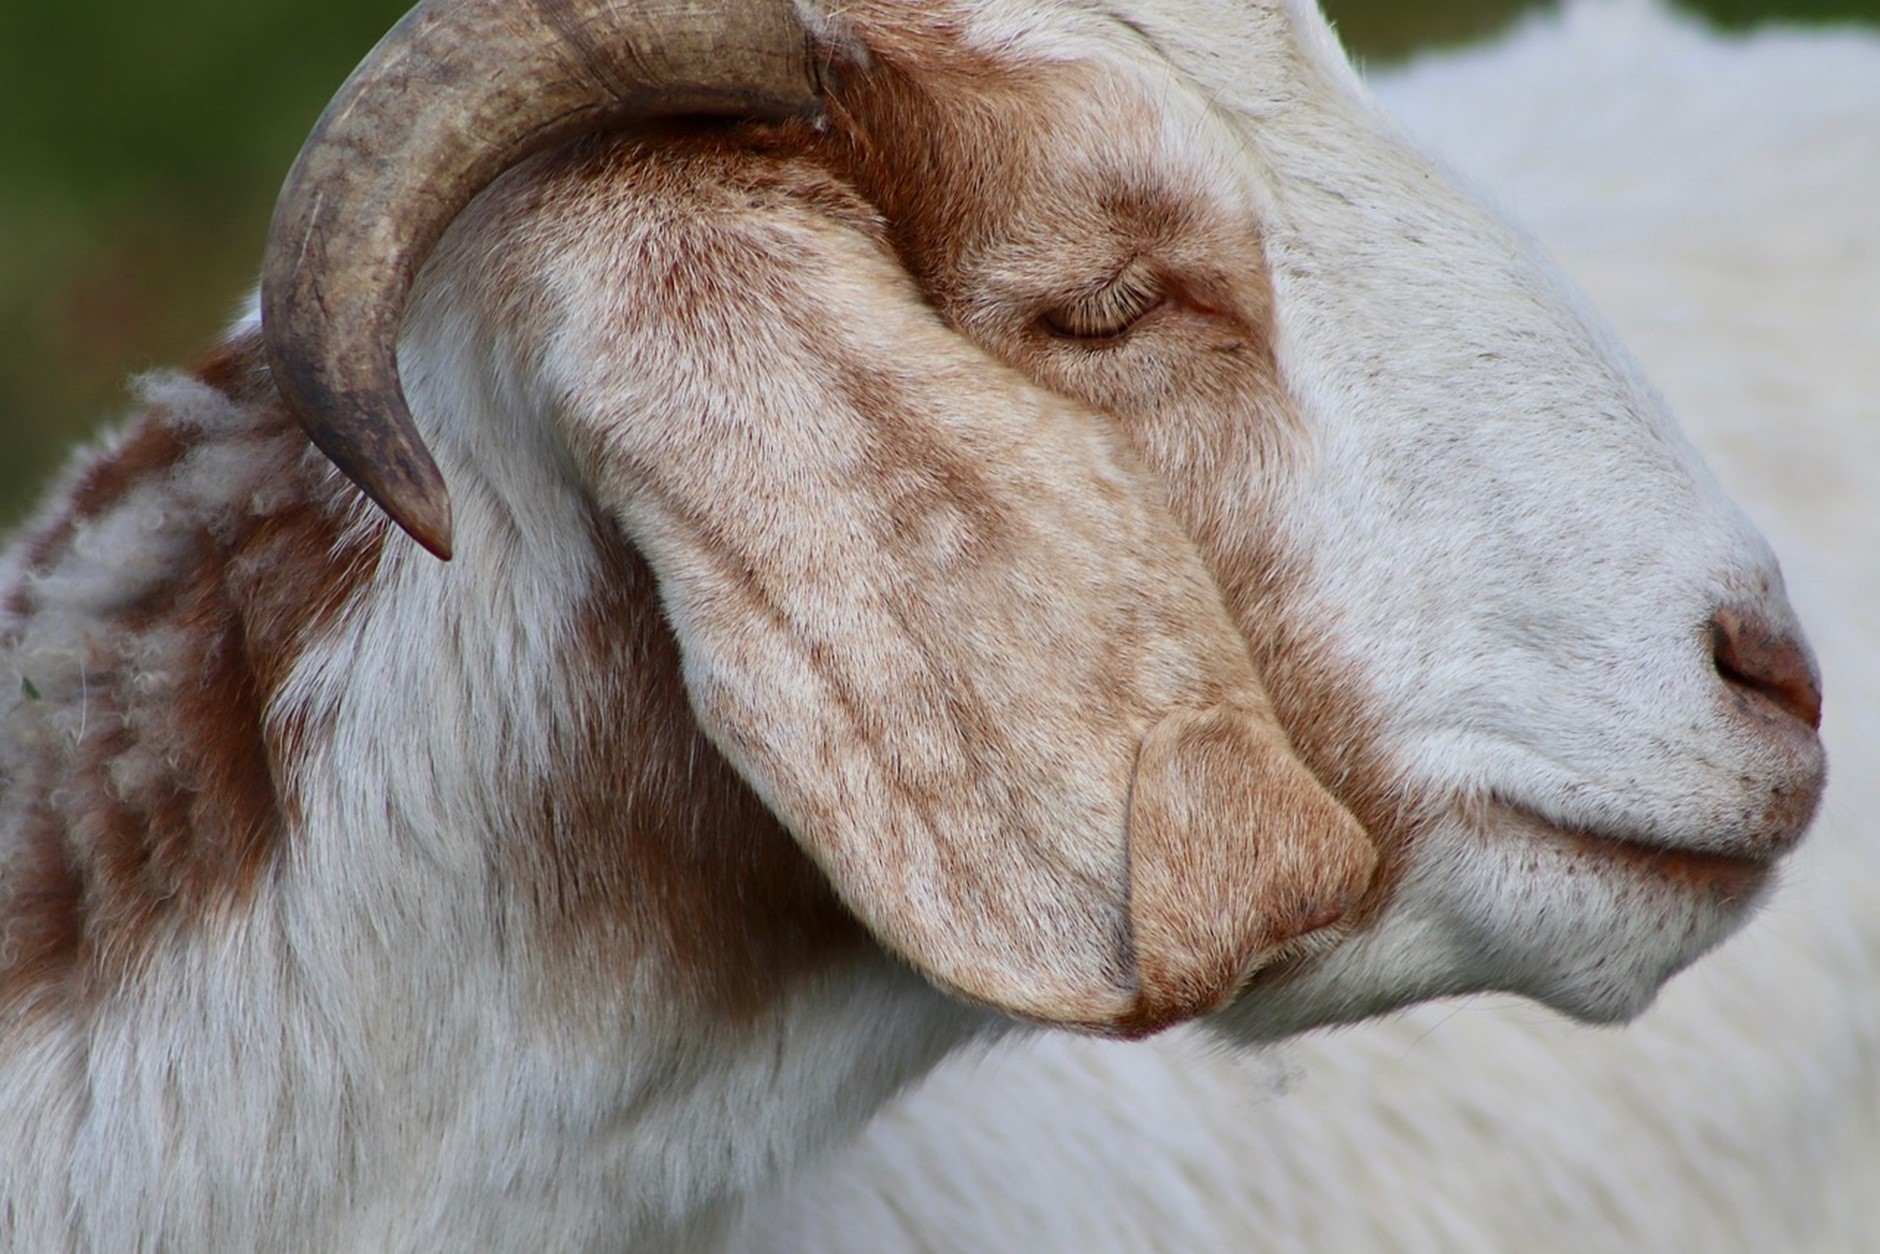 Wether Goats Live Longer